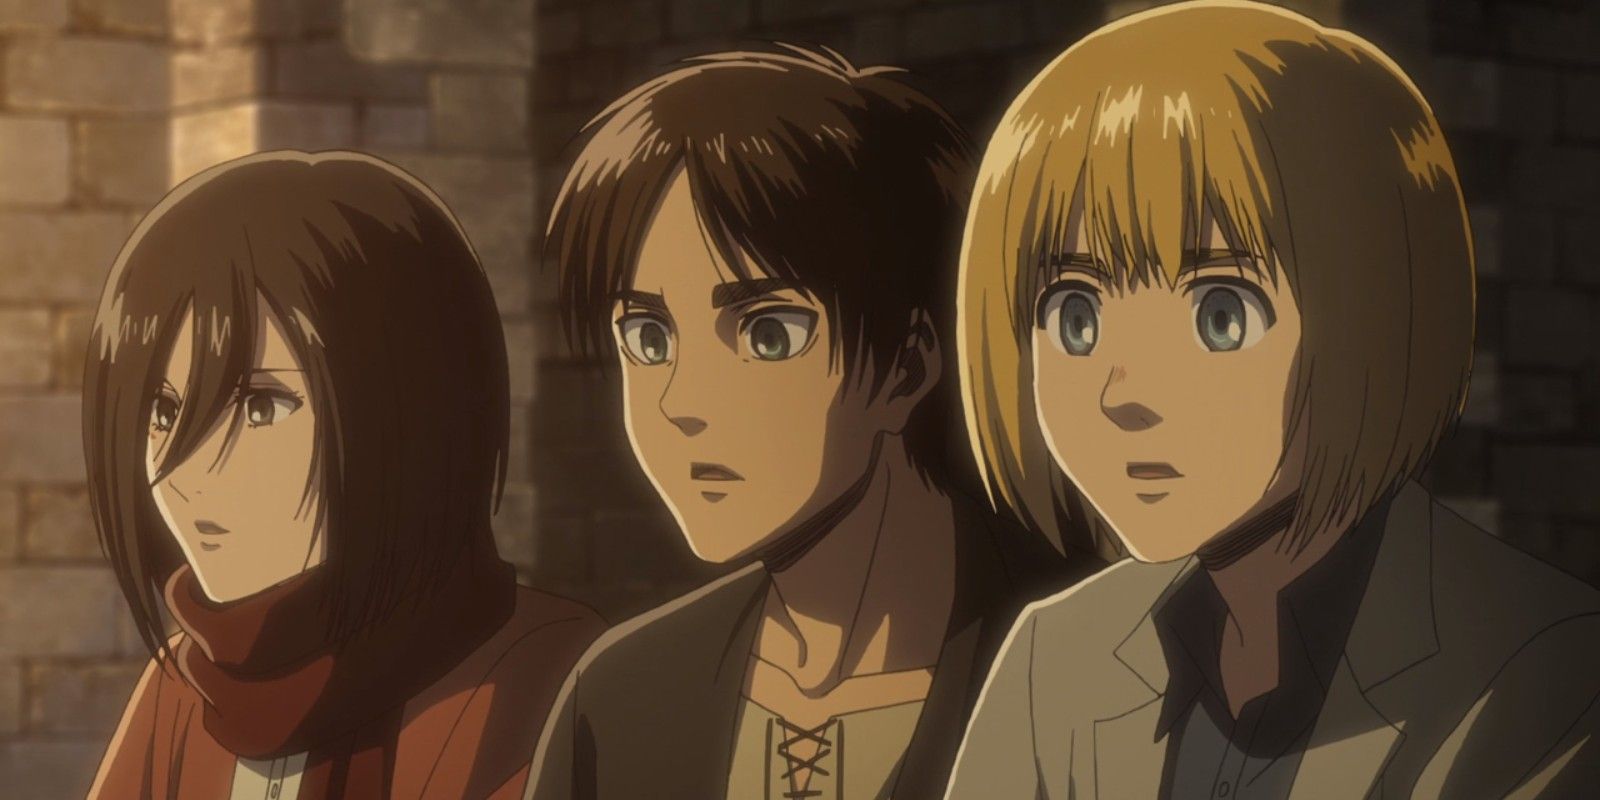 Mikasa, Eren, and Armin